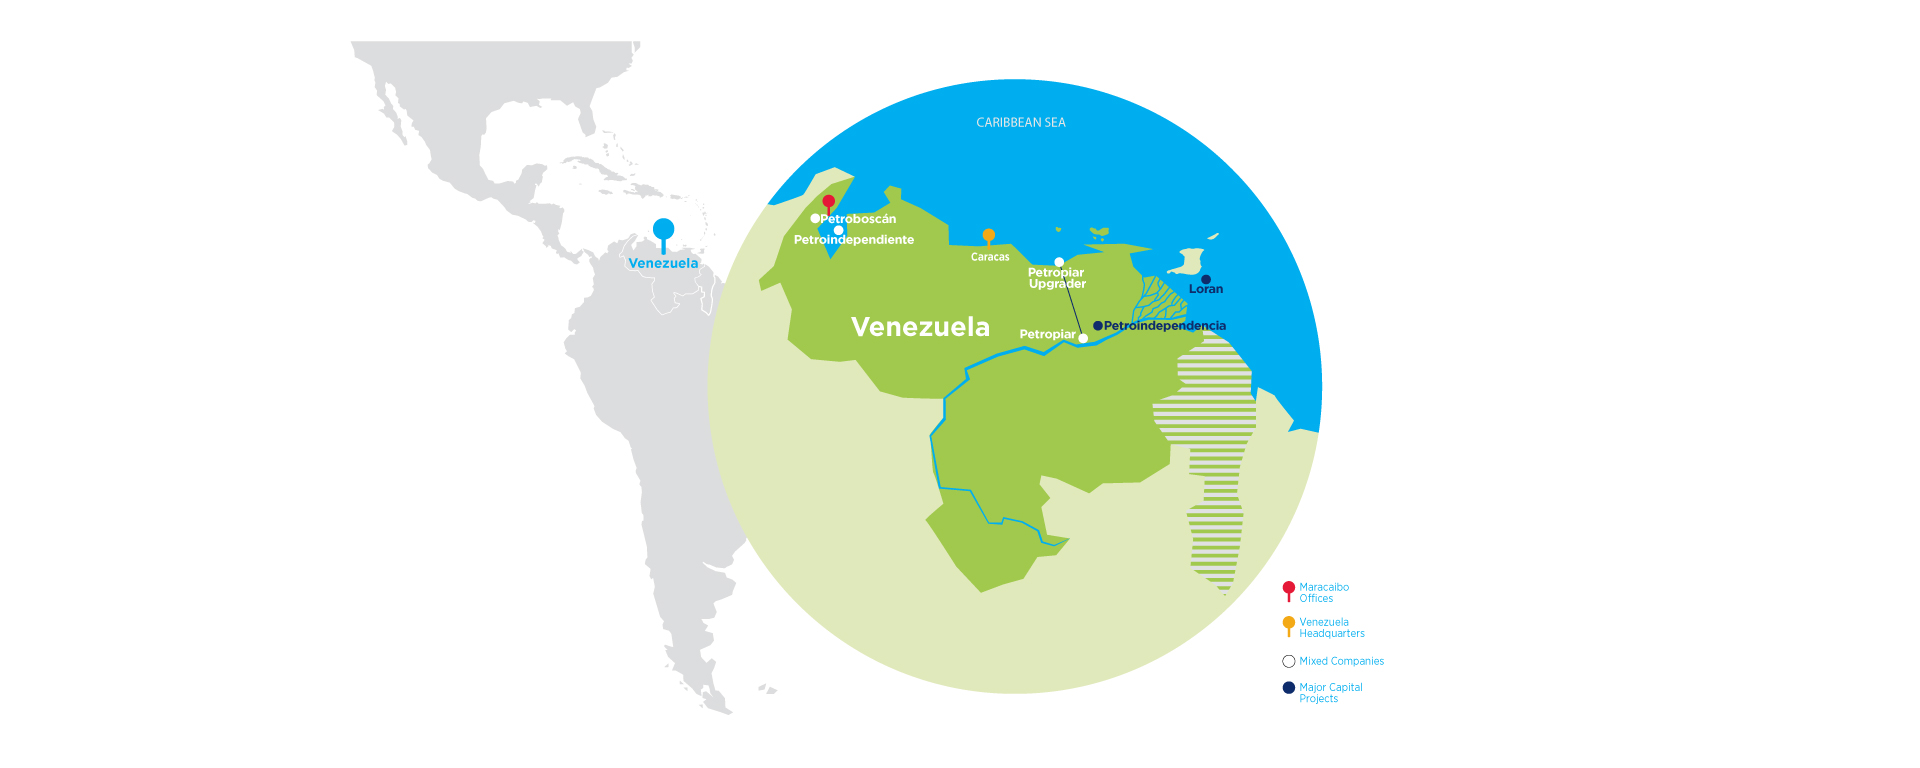 Map of Chevron's operations in Venezuela